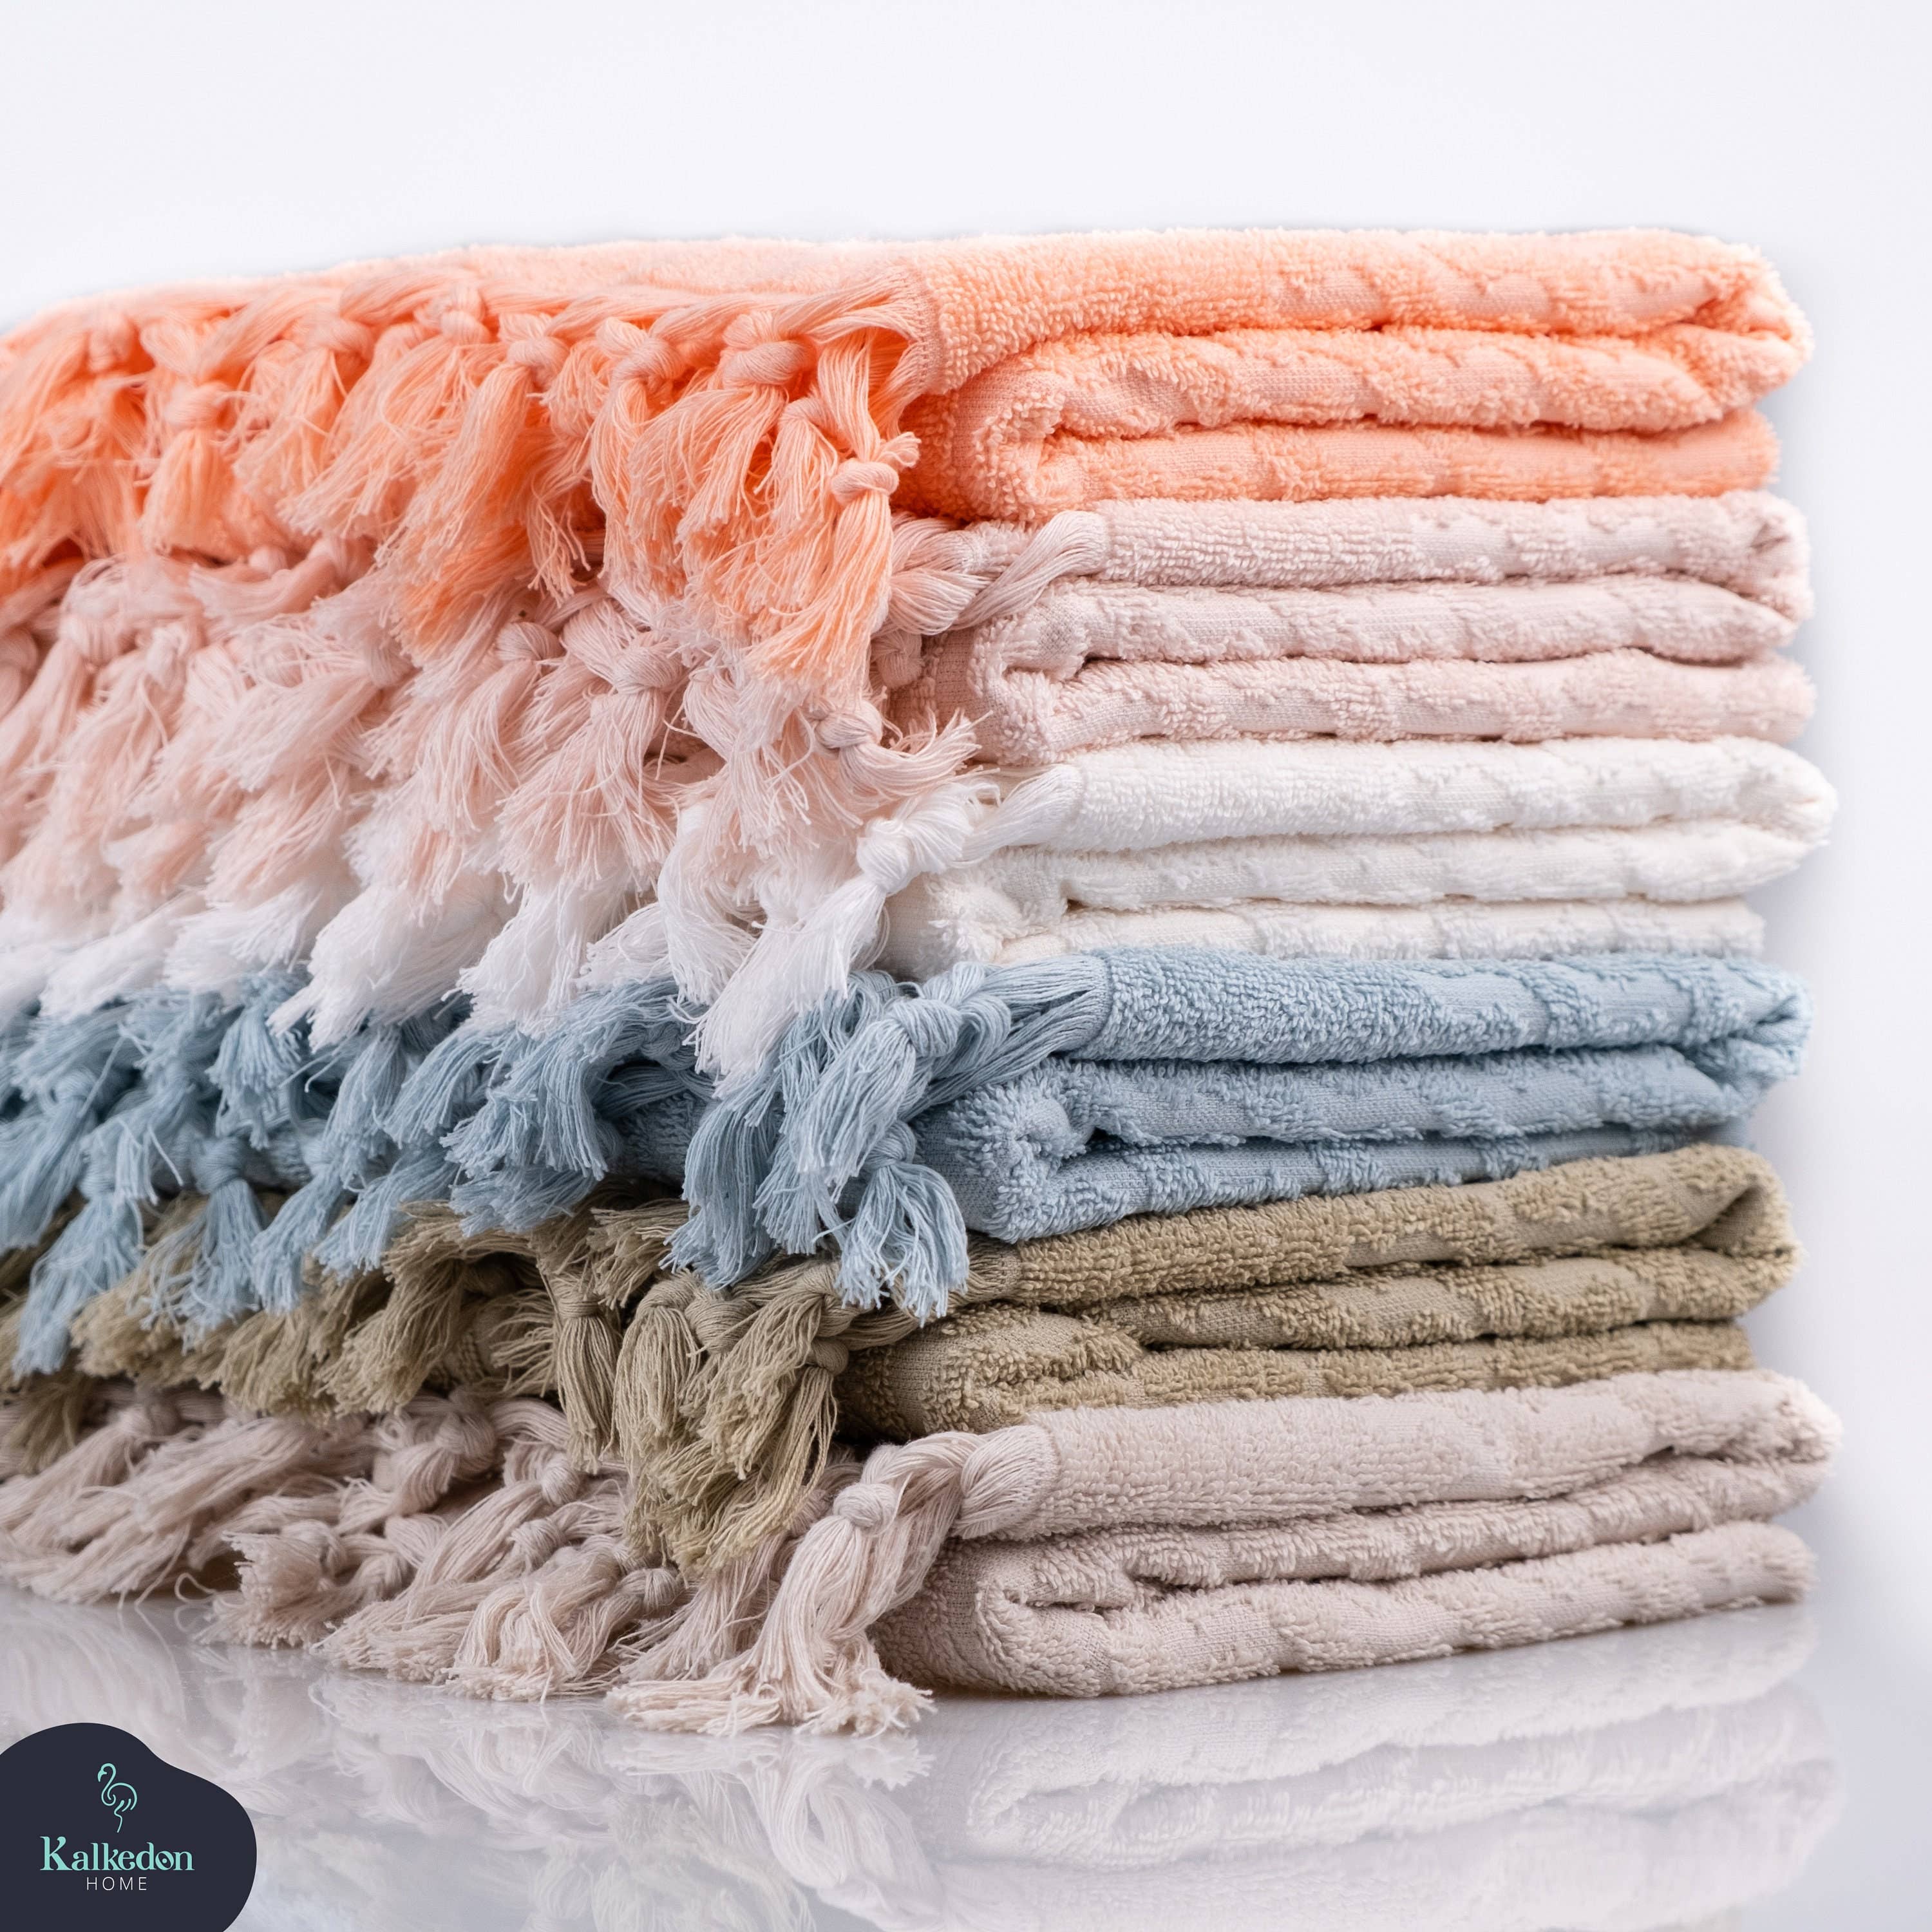 CLEARANCE SALE Boho Turkish Towel, Gray, Ivory Quick-dry Beach & Bath Towels  Cotton Yoga Spa Fouta Authentic Throw SAND 